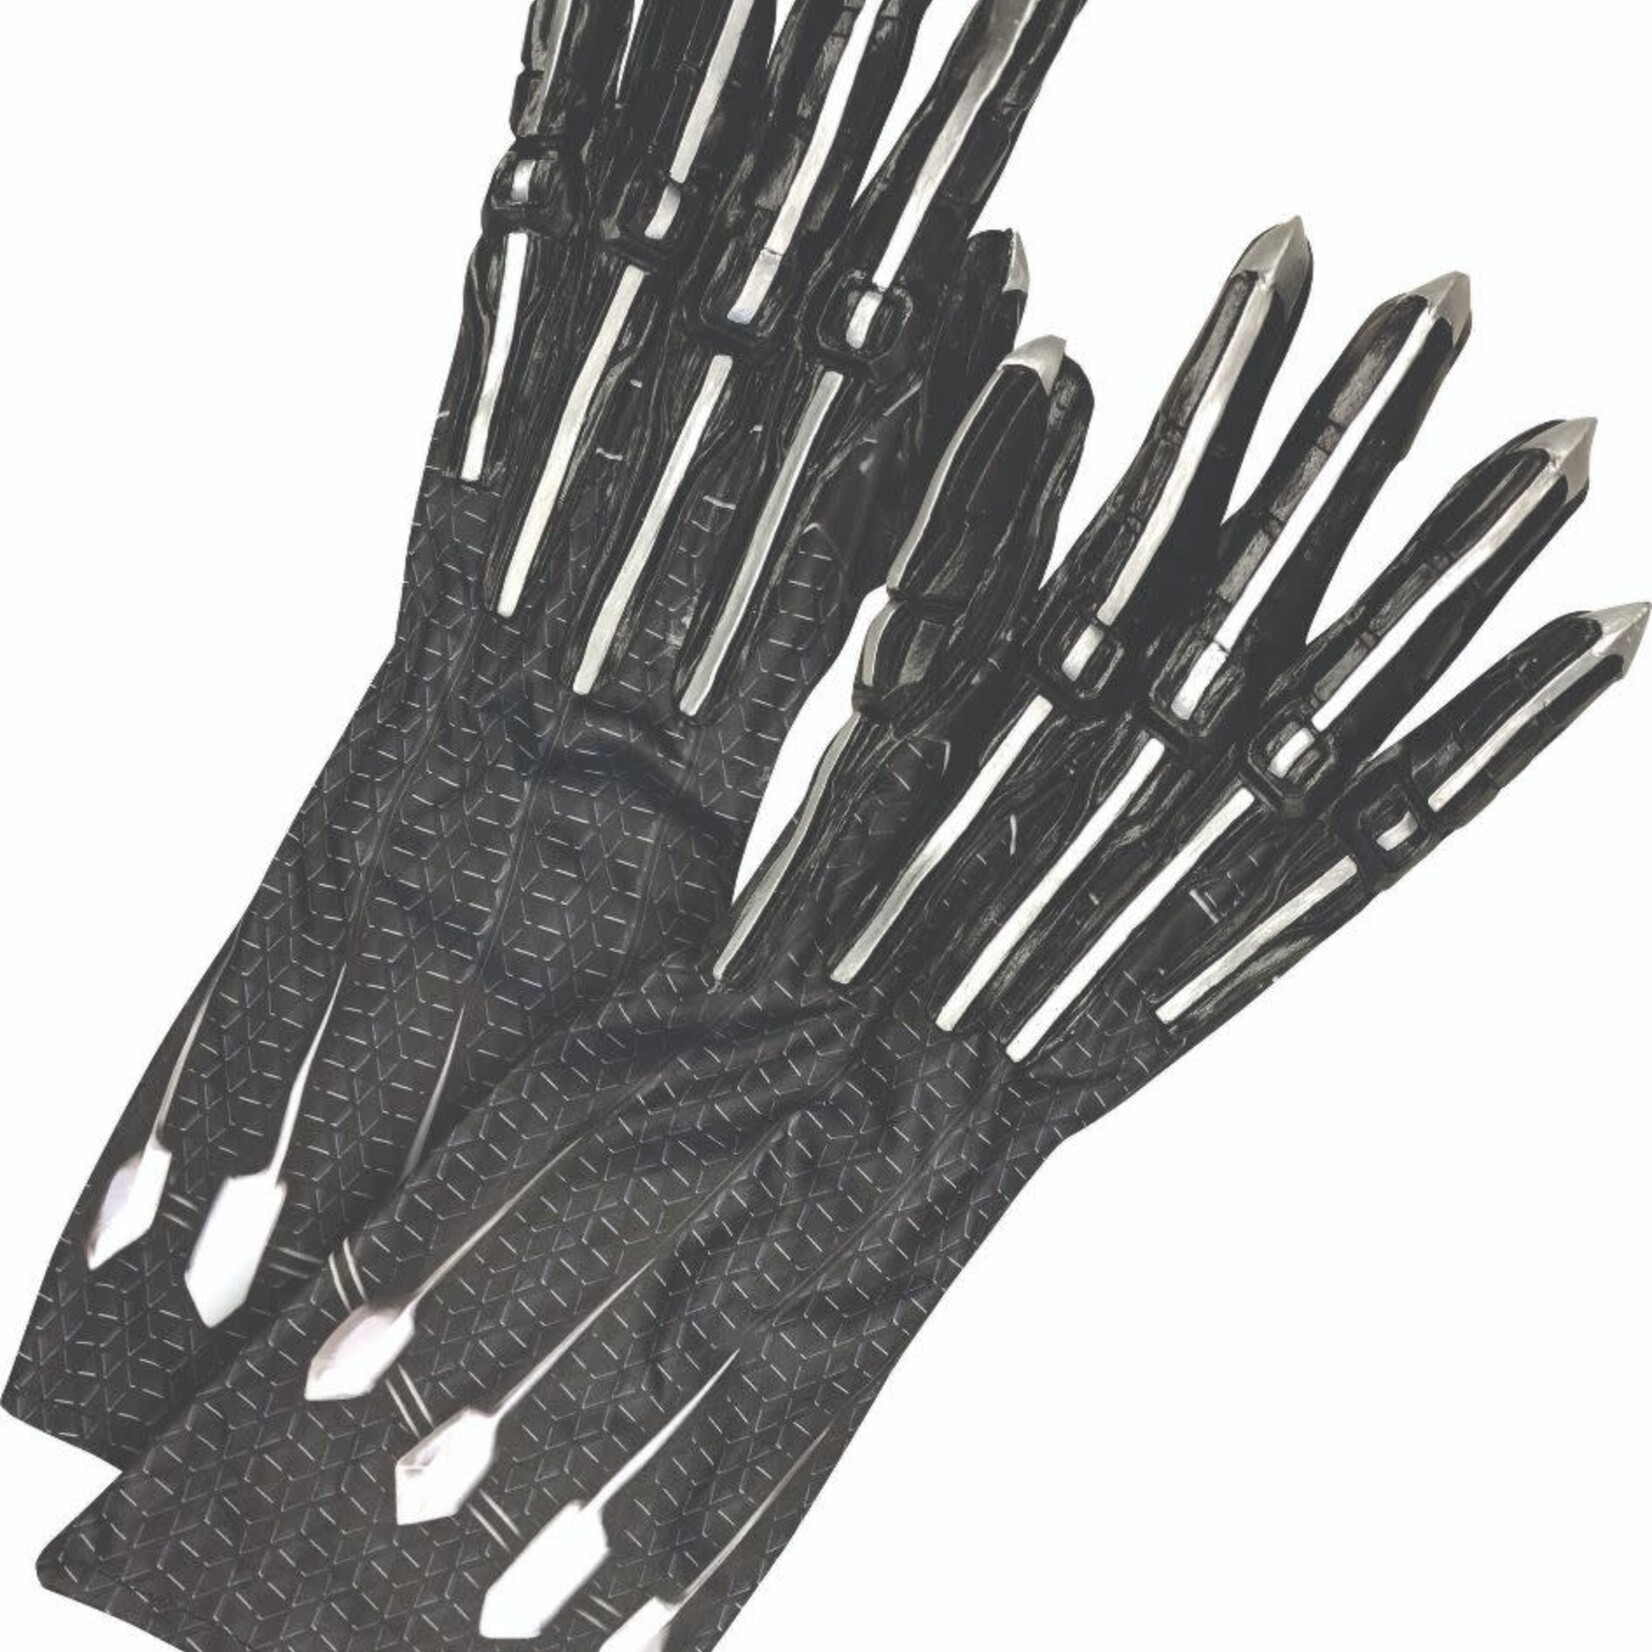 Black Panther Adult Glove